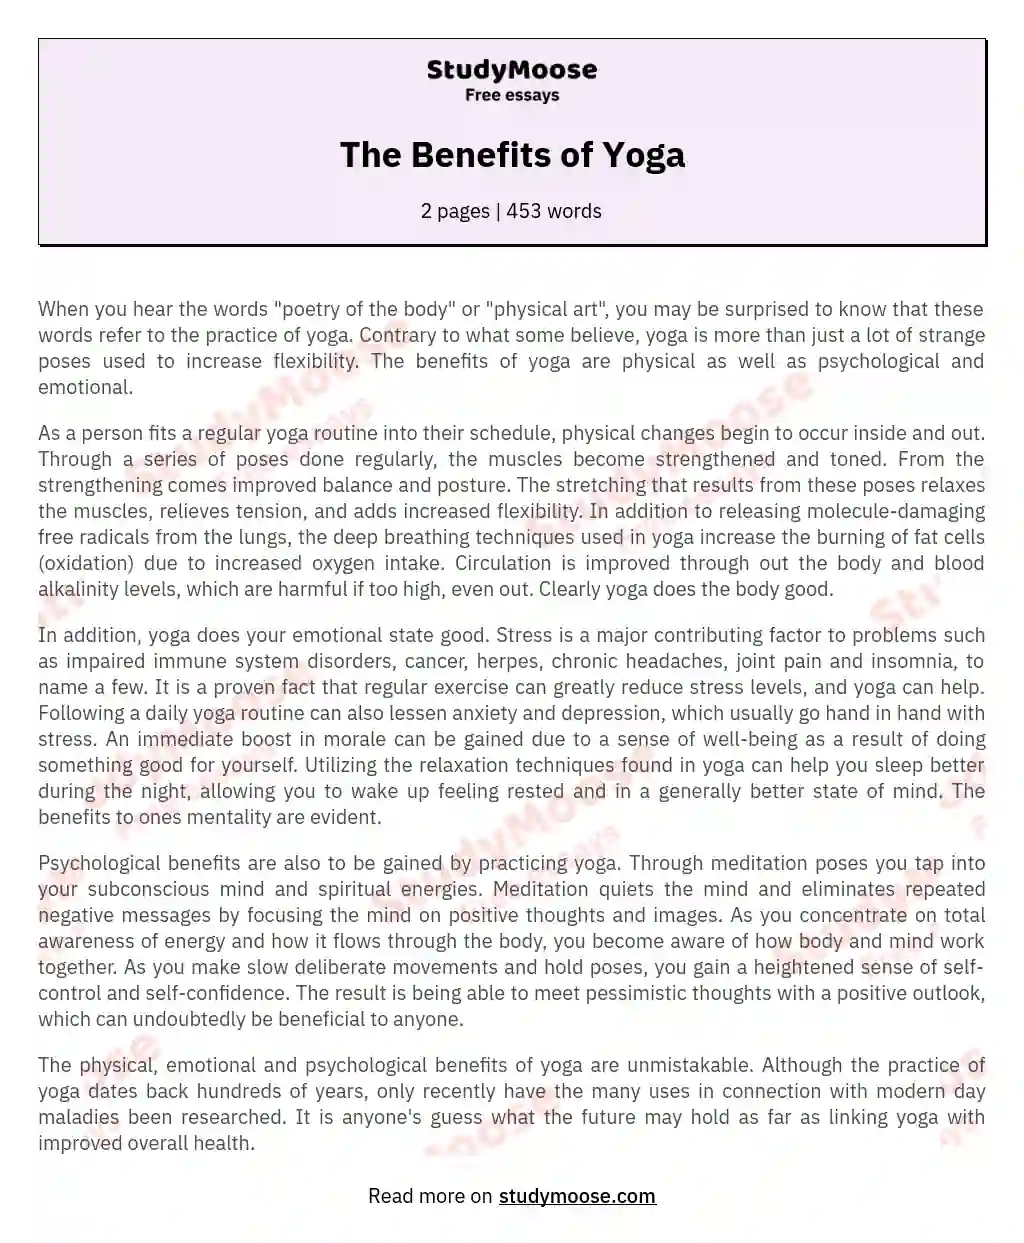 The Benefits of Yoga essay